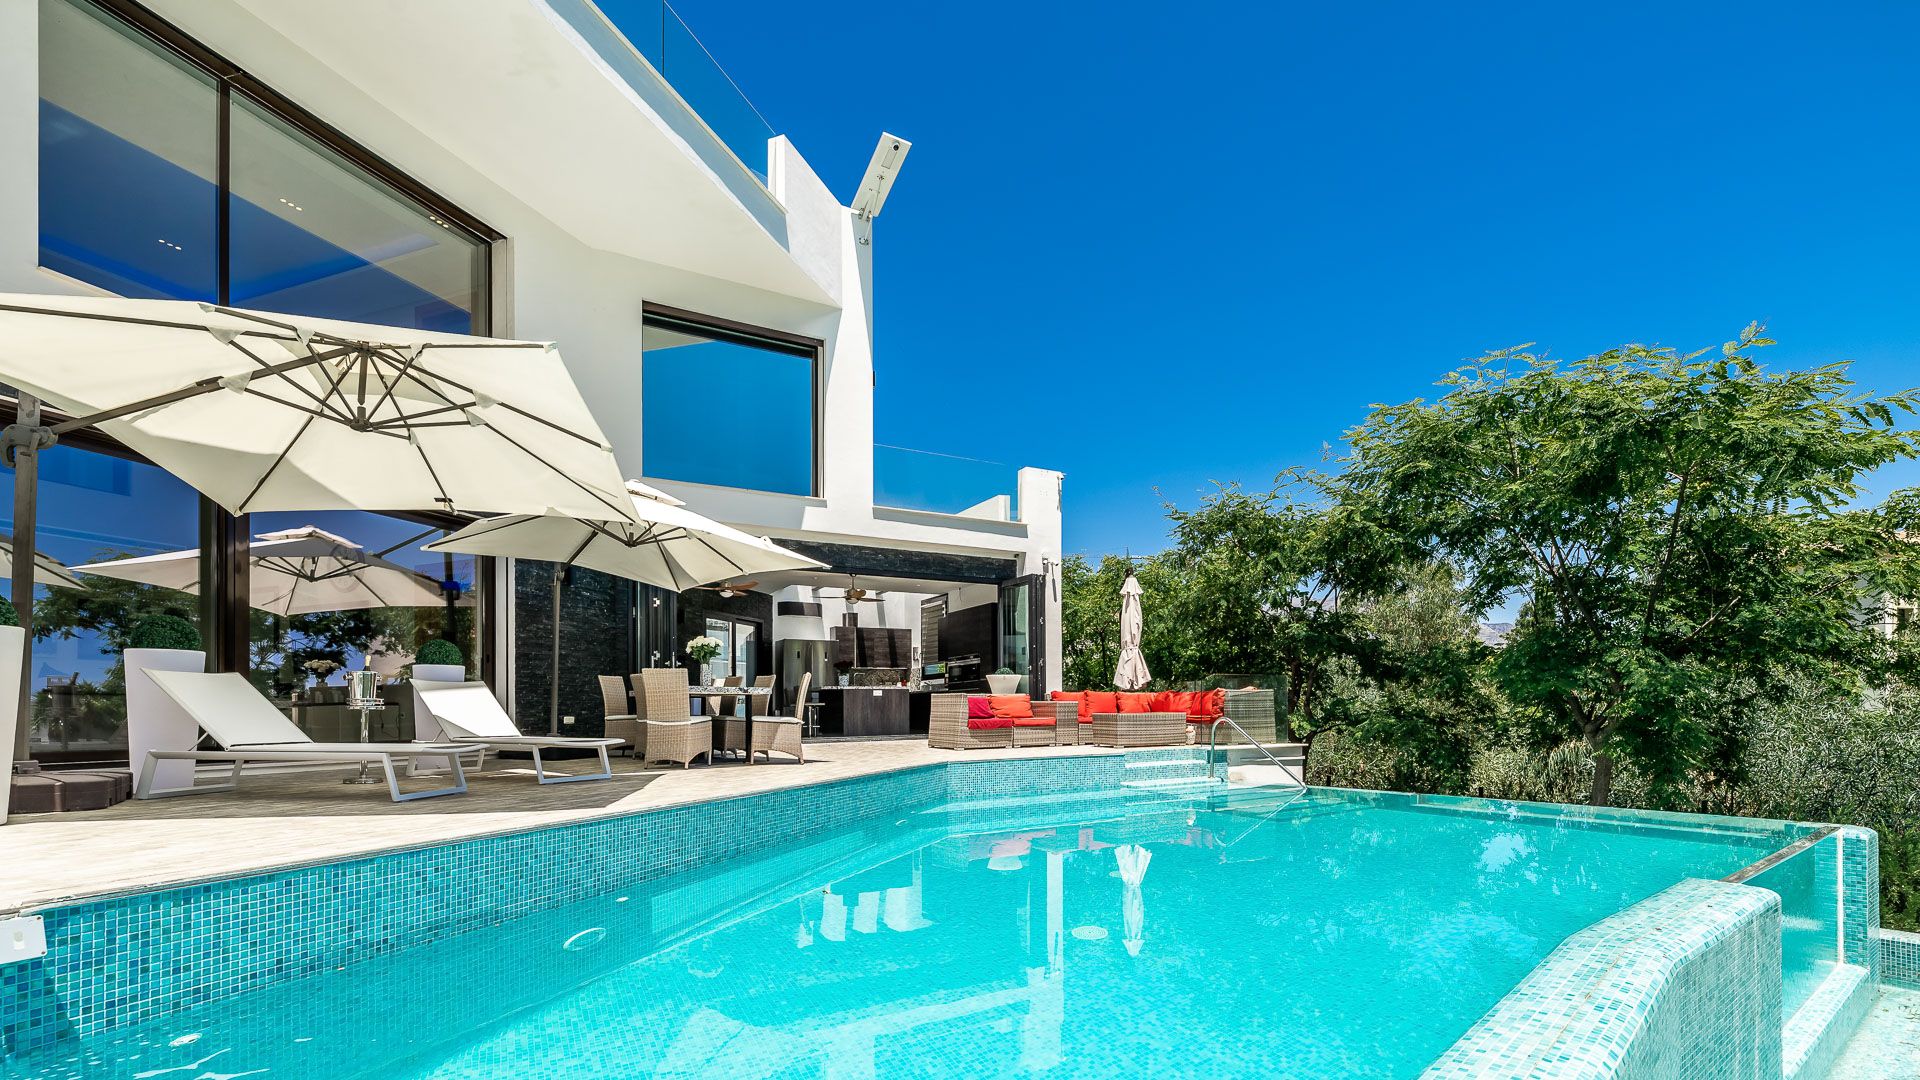 Magnificent modern villa with panoramic views | Engel & Völkers Marbella